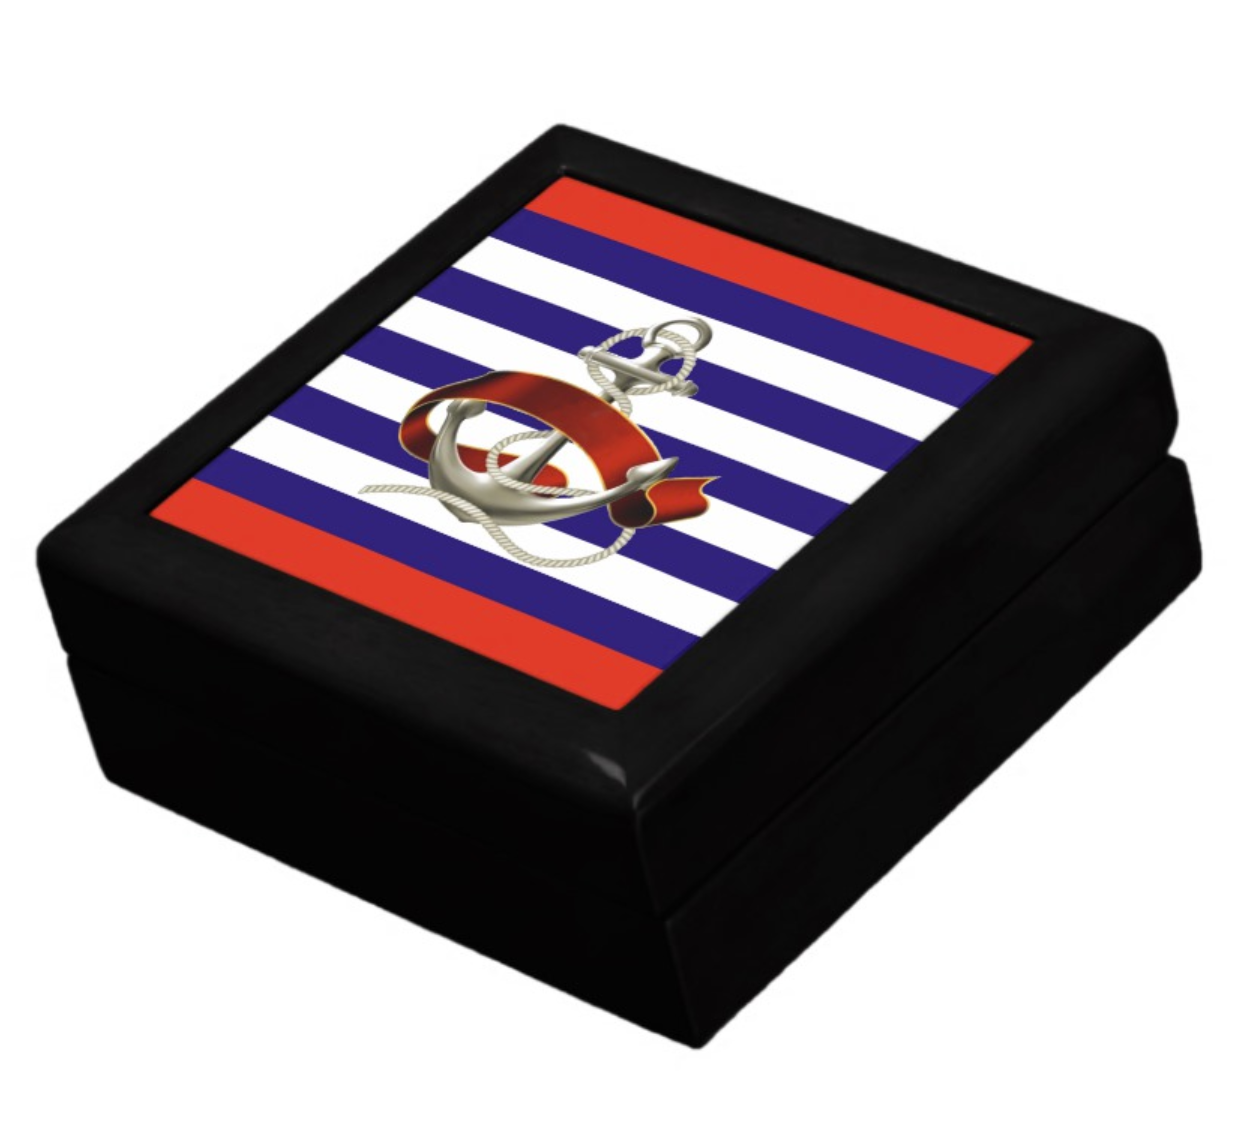 Keepsake/Jewelry Box - Nautical Anchor Design - Black Lacquer Box